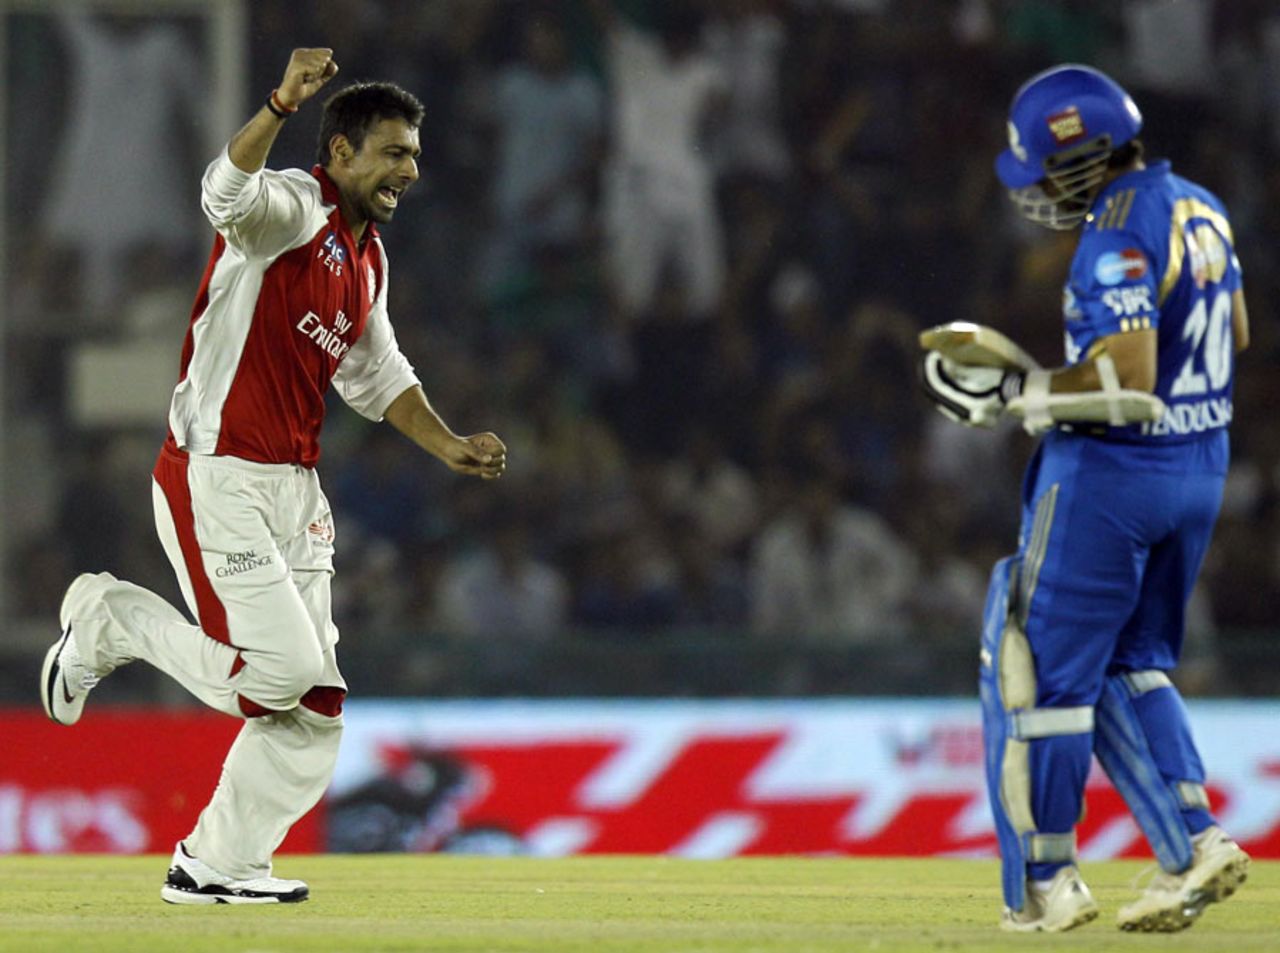 Praveen Kumar is overjoyed at dismissing Sachin Tendulkar, Kings XI Punjab v Mumbai Indians, IPL 2011, Mohali, May 10, 2011